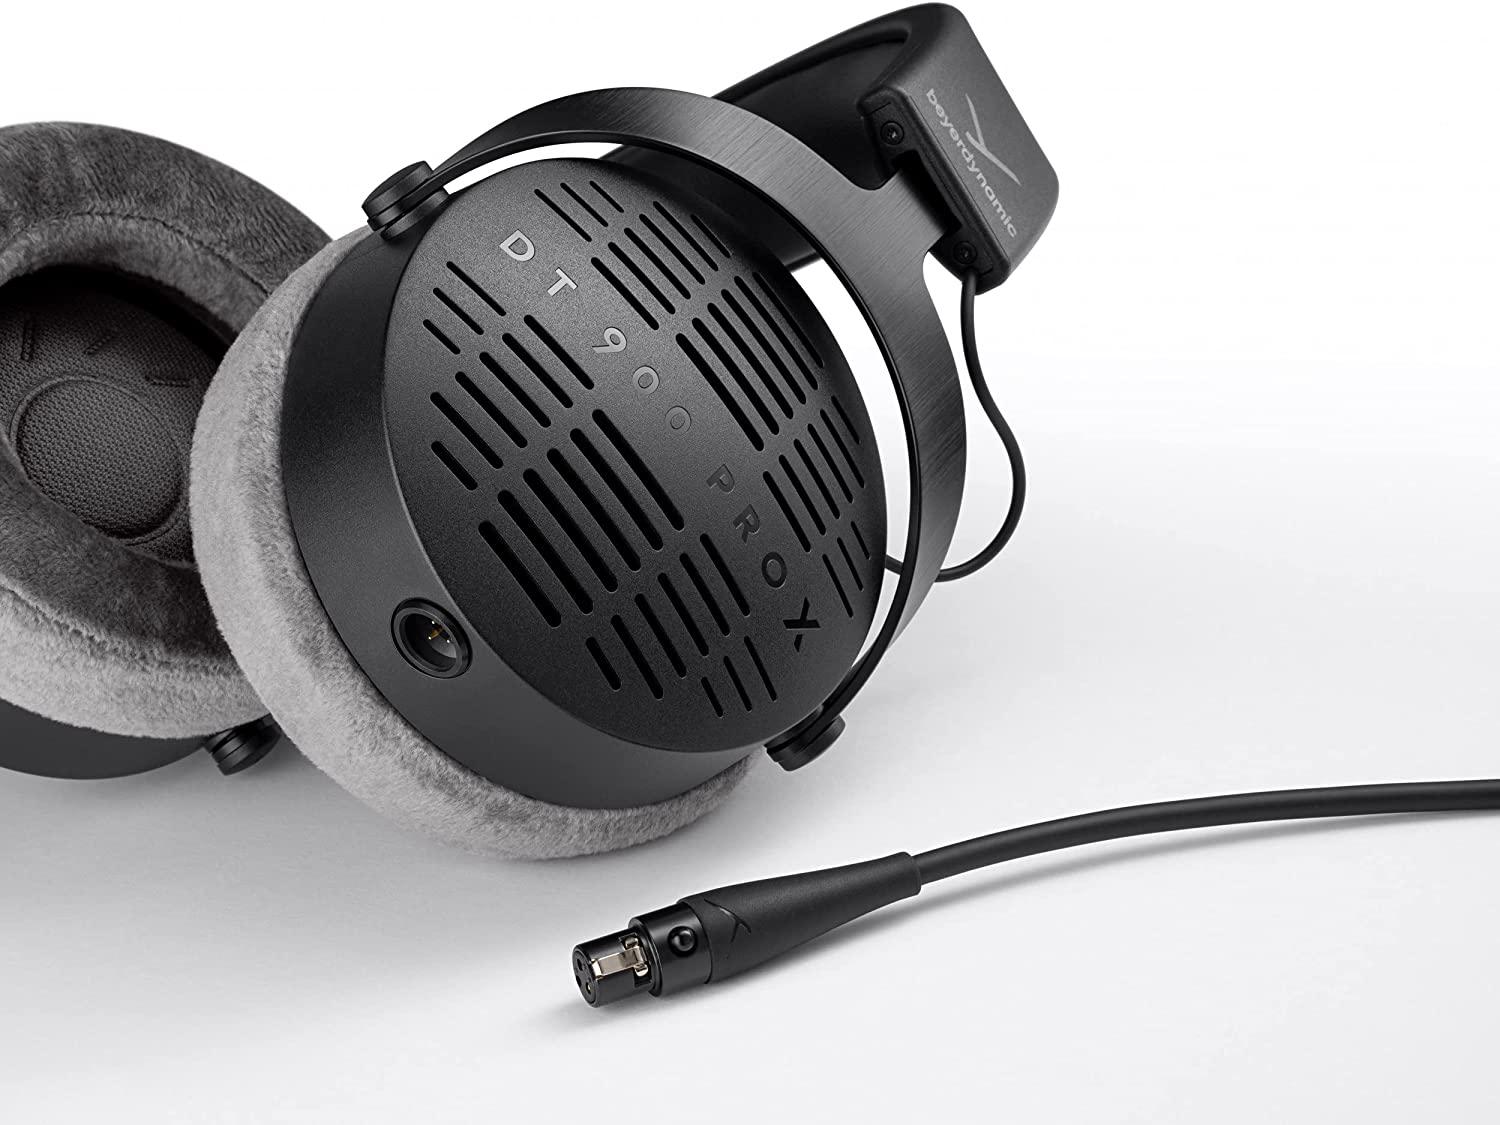 Beyerdynamic DT 900 Pro X Open-Back Studio Headphones with Cleaning Kit Bundle